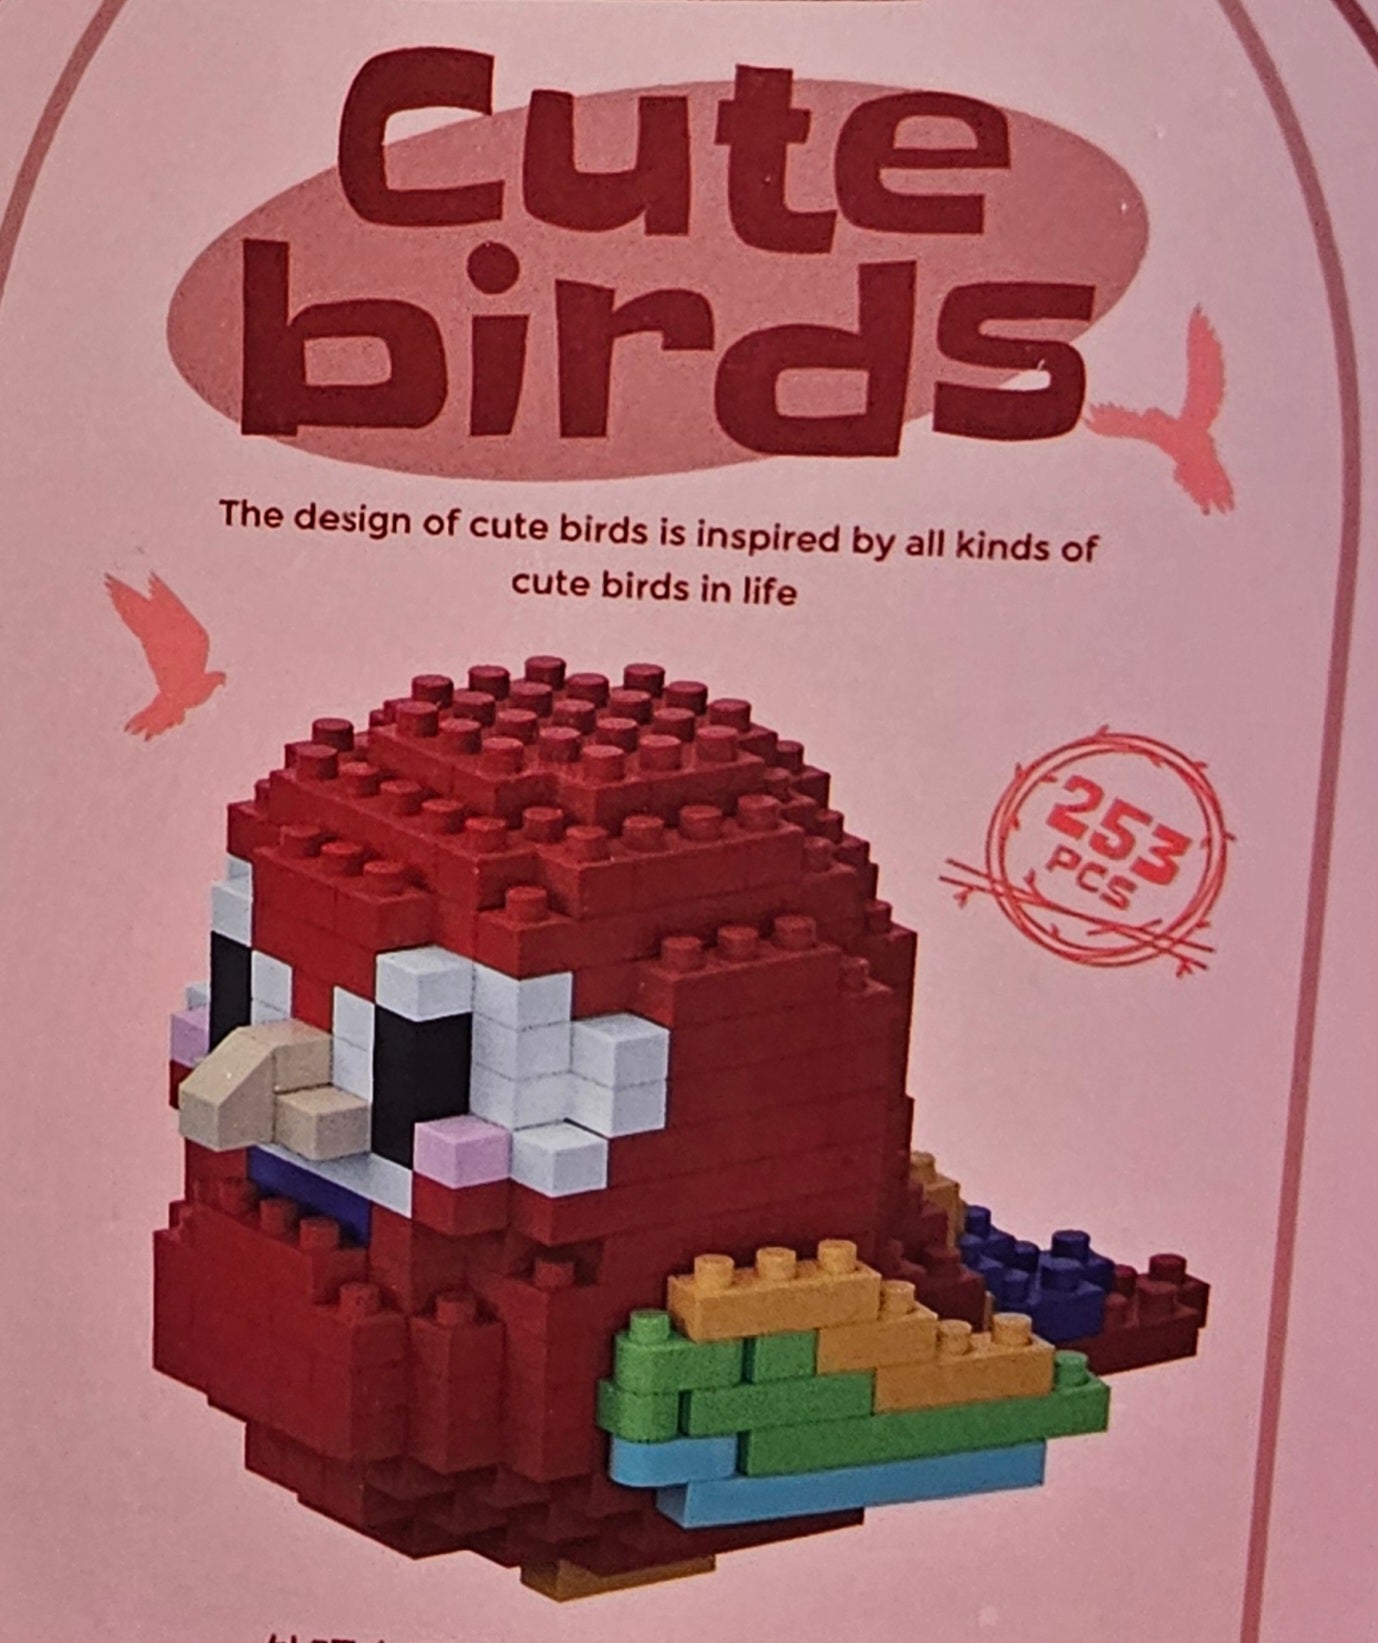 Cute birds building blocks